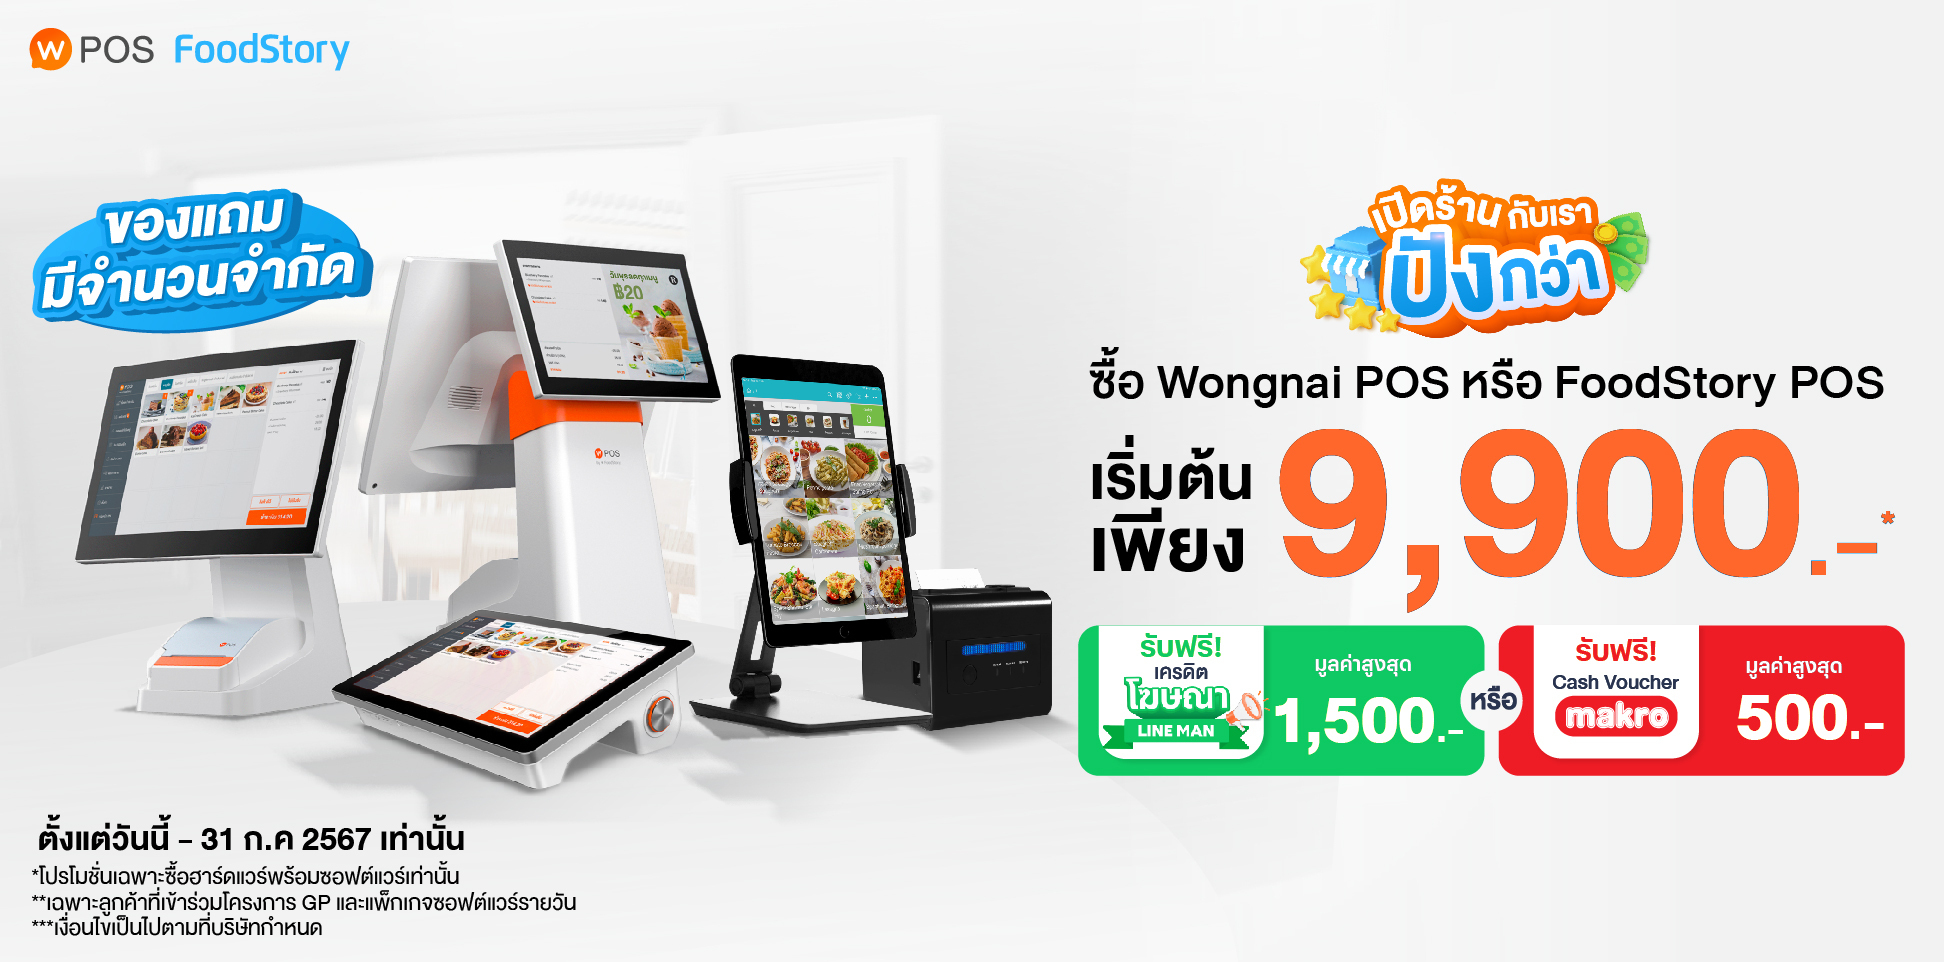 Wongnai POS & FoodStory POS ลดสูงสุด 8,000.- ผ่อน 0% นาน 10 เดือน